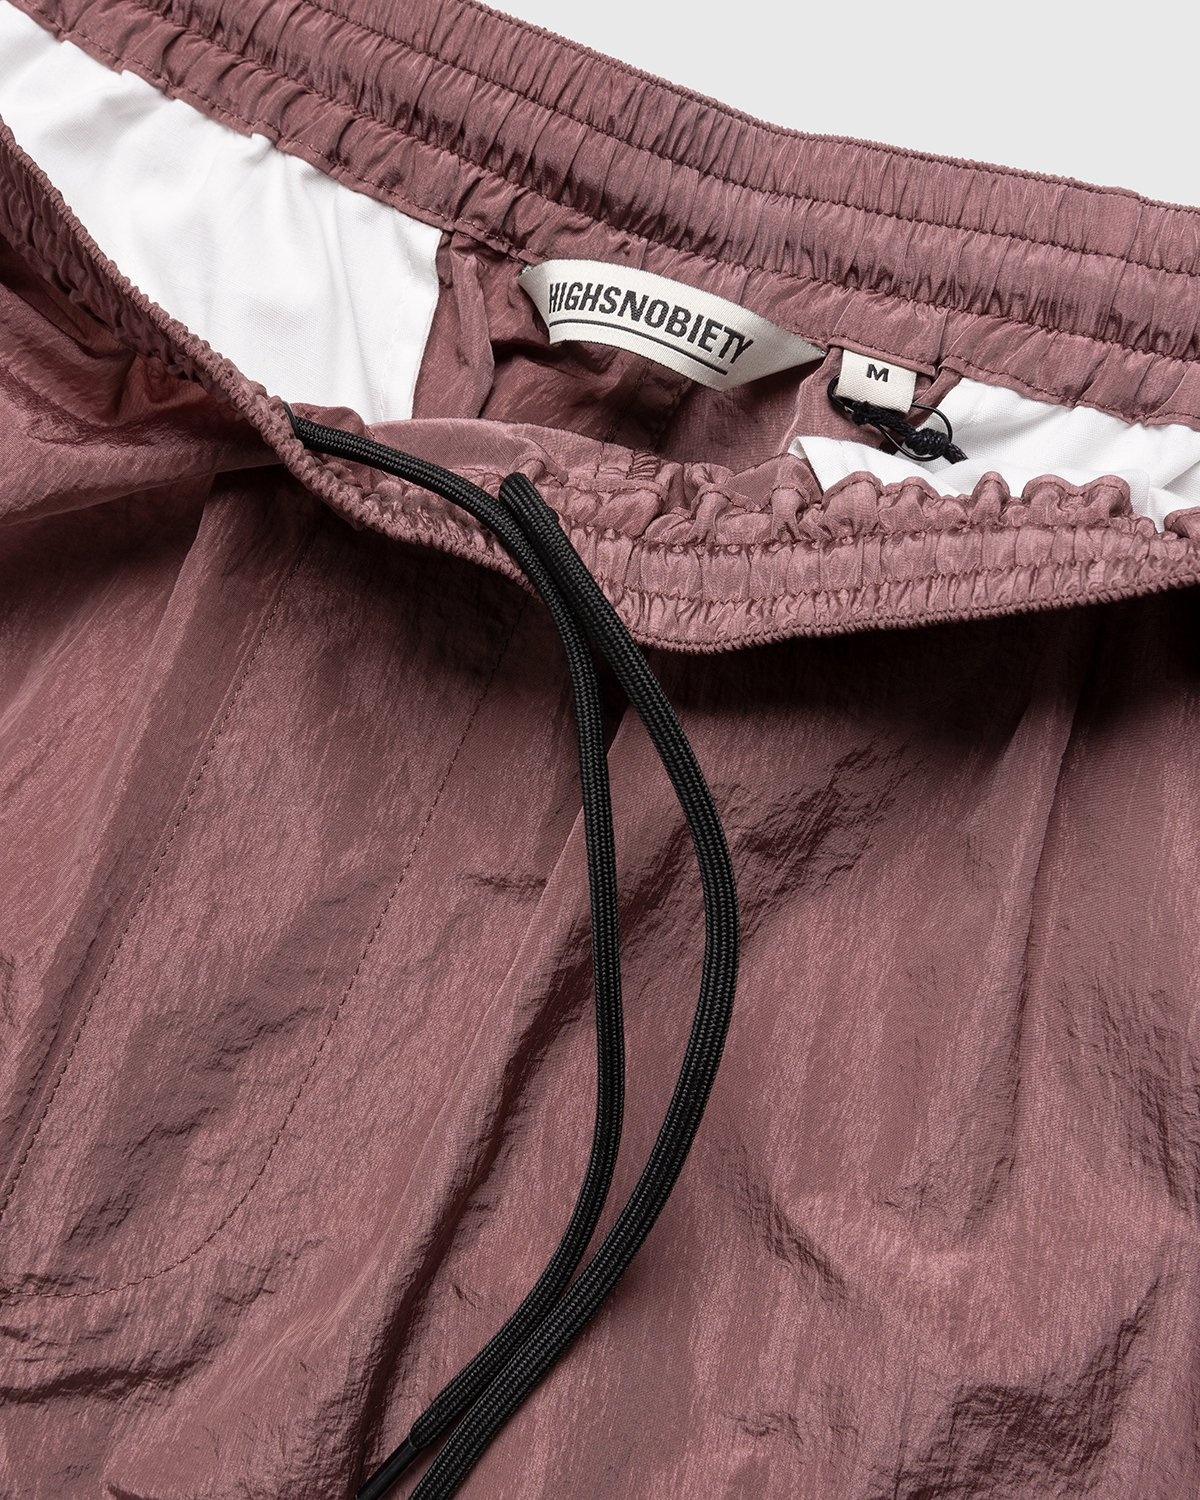 Highsnobiety – Crepe Nylon Elastic Pants Rose Gold - Pants - Pink - Image 5